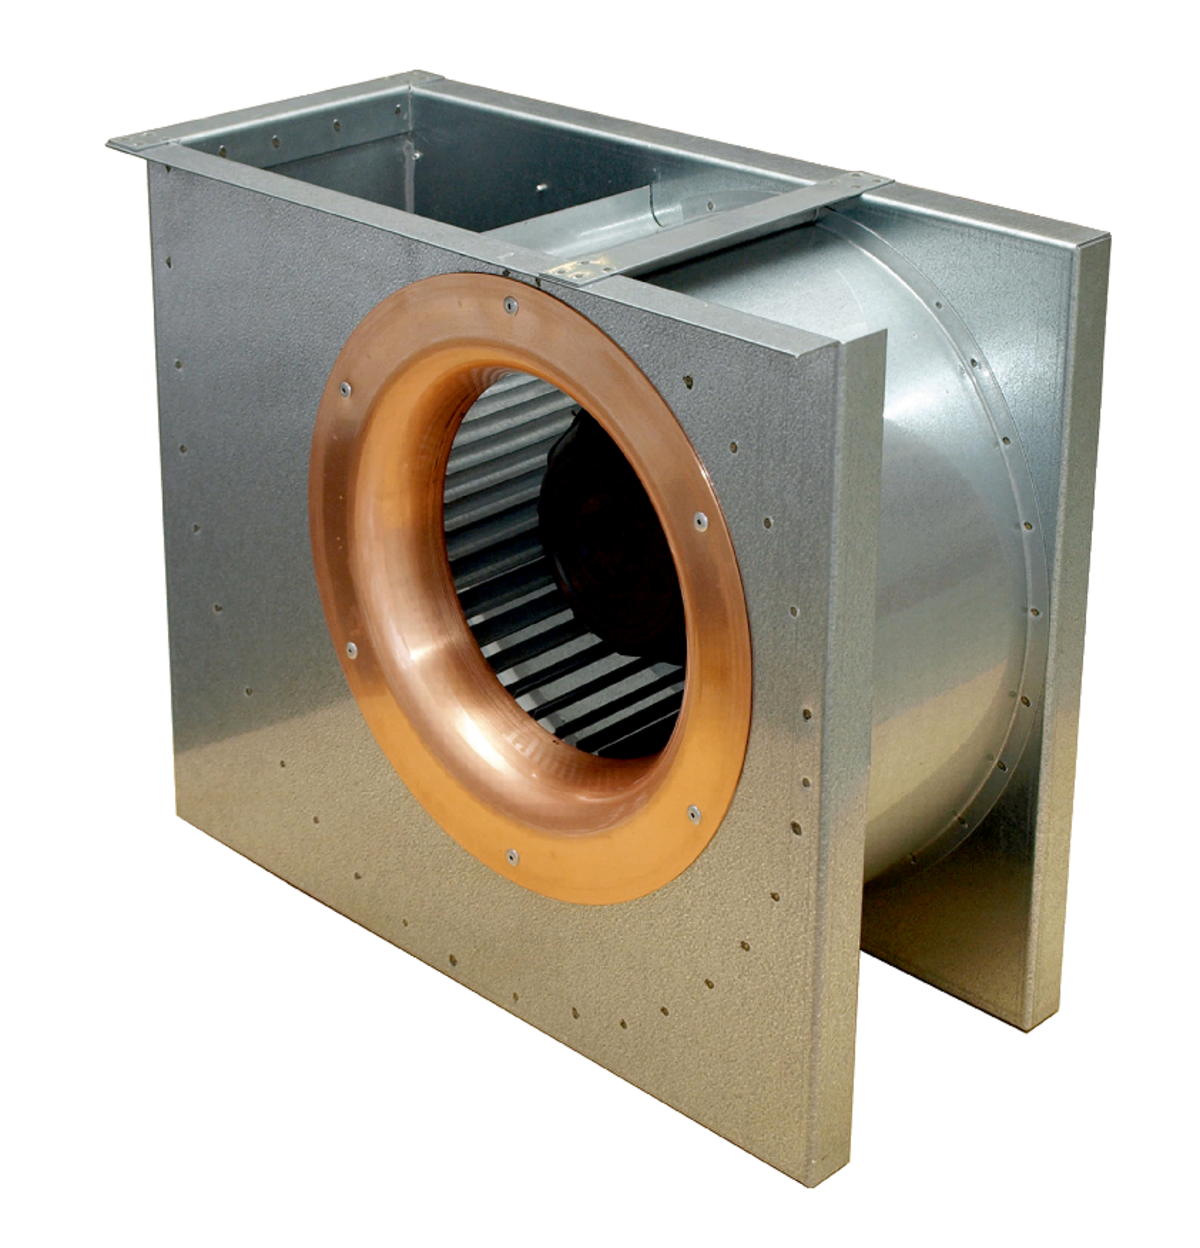 DKEX - Centrifugale ventilatoren - Ventilatoren & Accessoires - Producten - Systemair